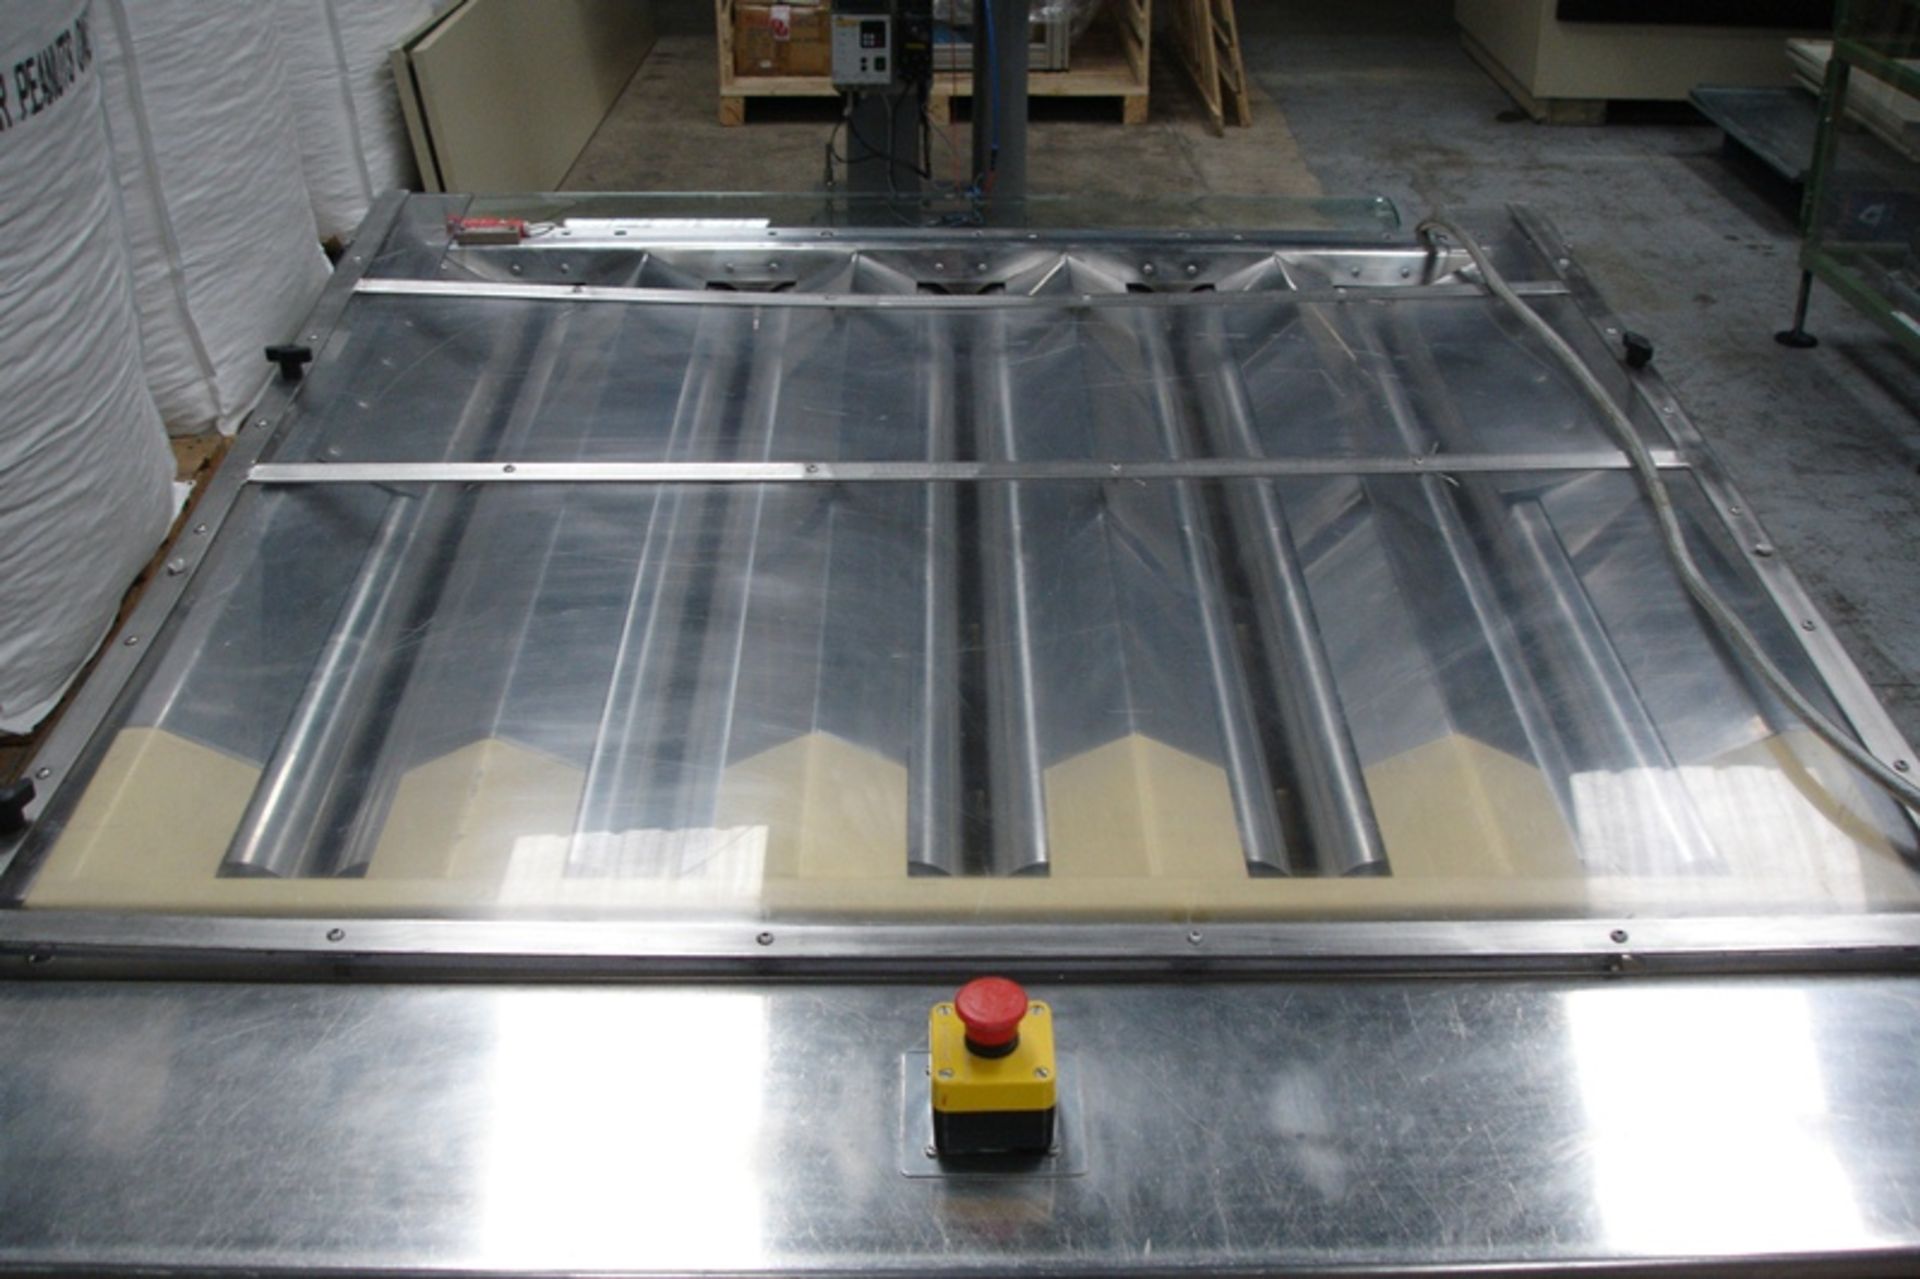 Fully Stainless Steel food grade 5 lane Grading/Sizing Machine - Image 3 of 7